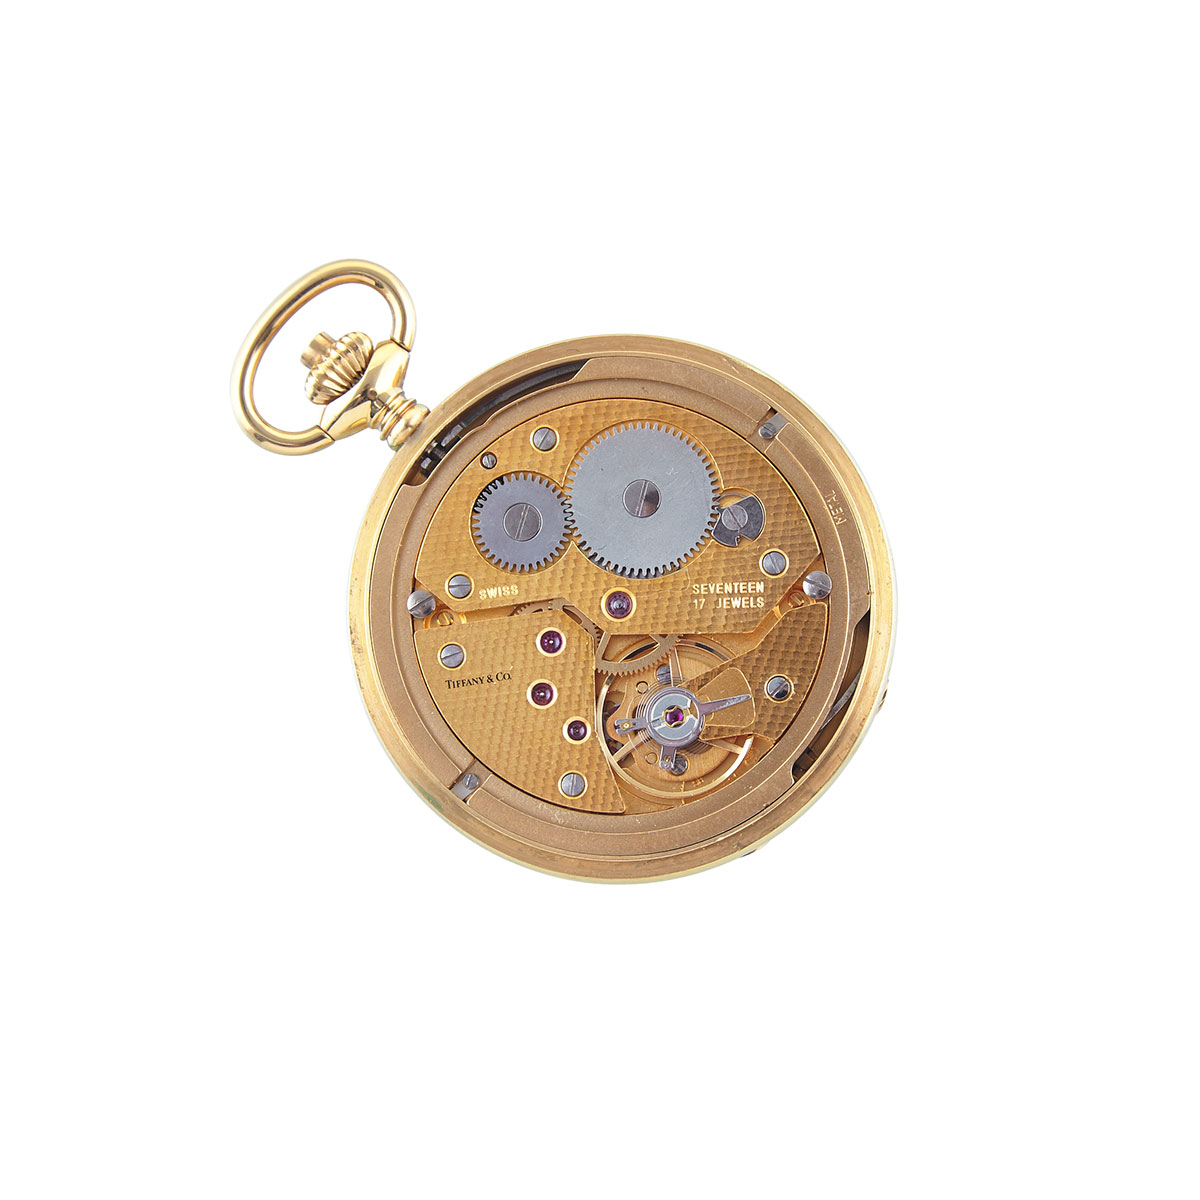 Tiffany & Co. Pocket Watch